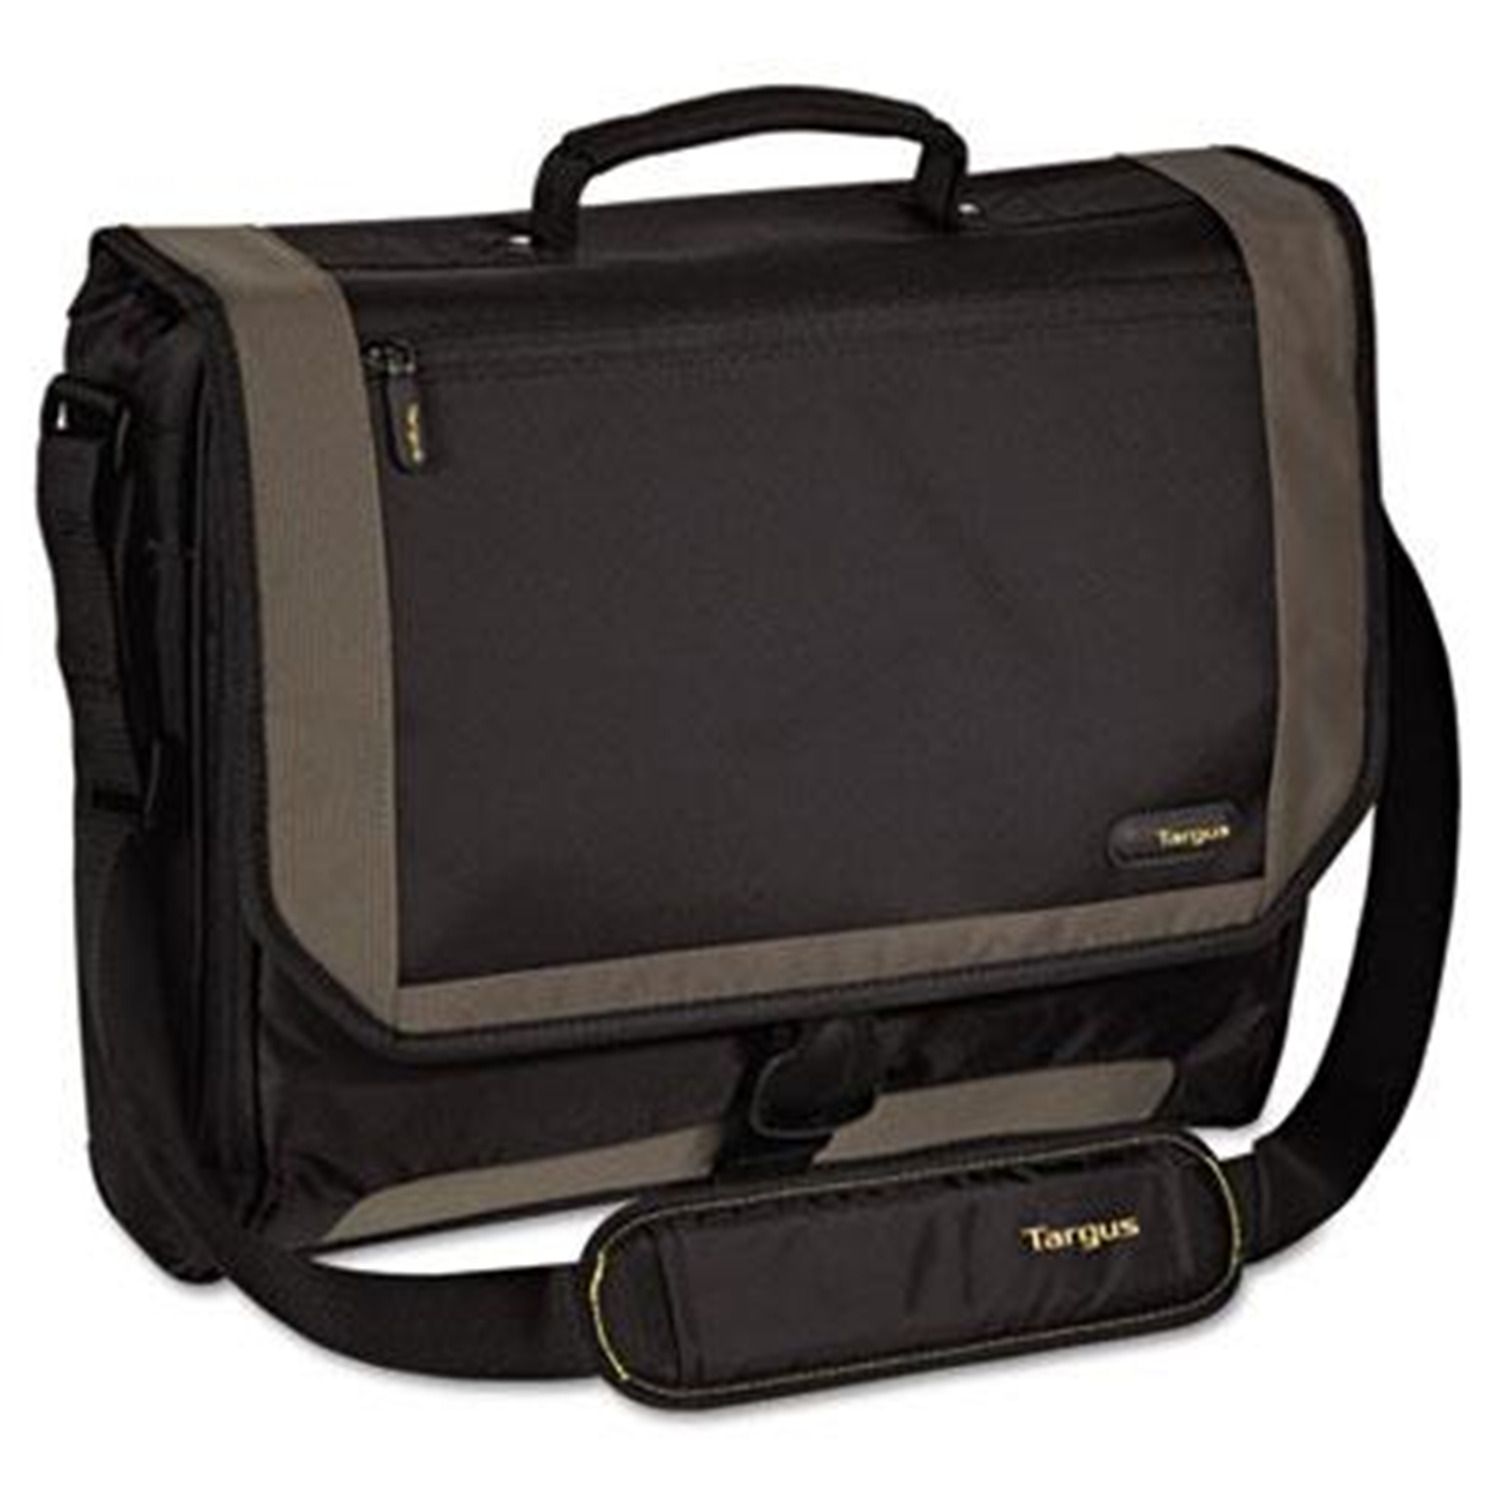 Targus CityGear TCG200 Carrying Case (Messenger) for 17" Notebook, Black, Yellow - image 2 of 4